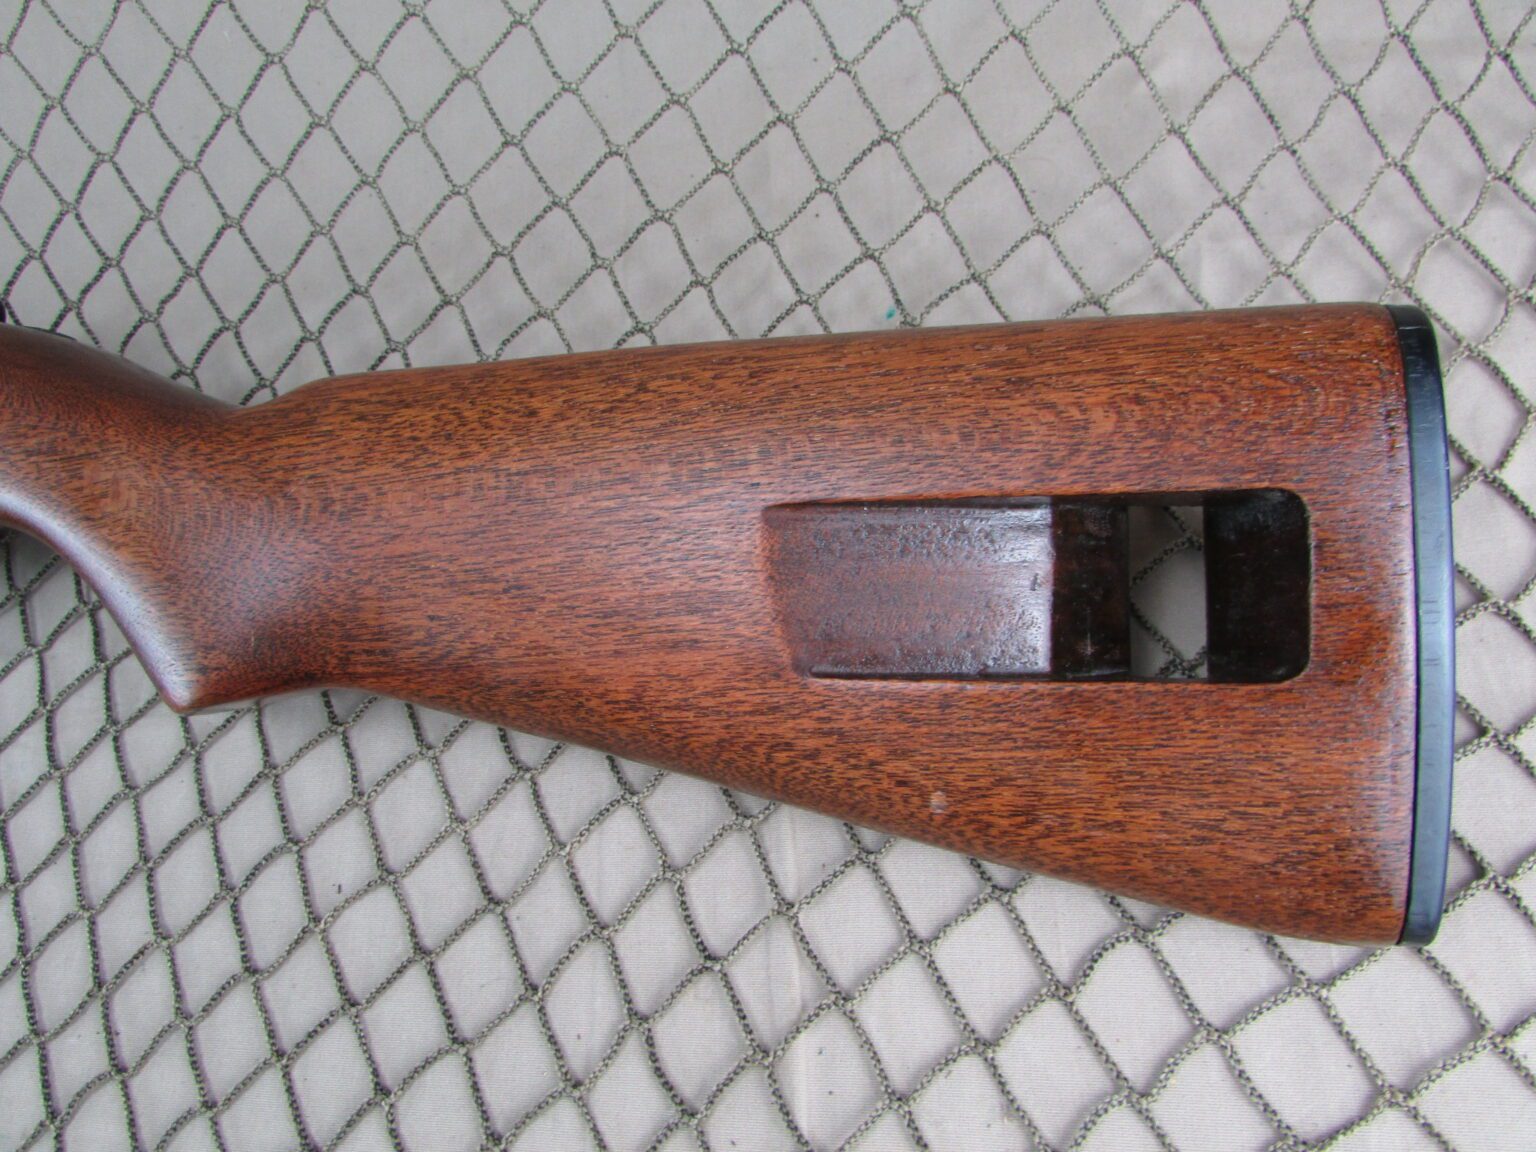 Sporterized National Postal Meter M1 Carbine #1476701 | St. Croix ...